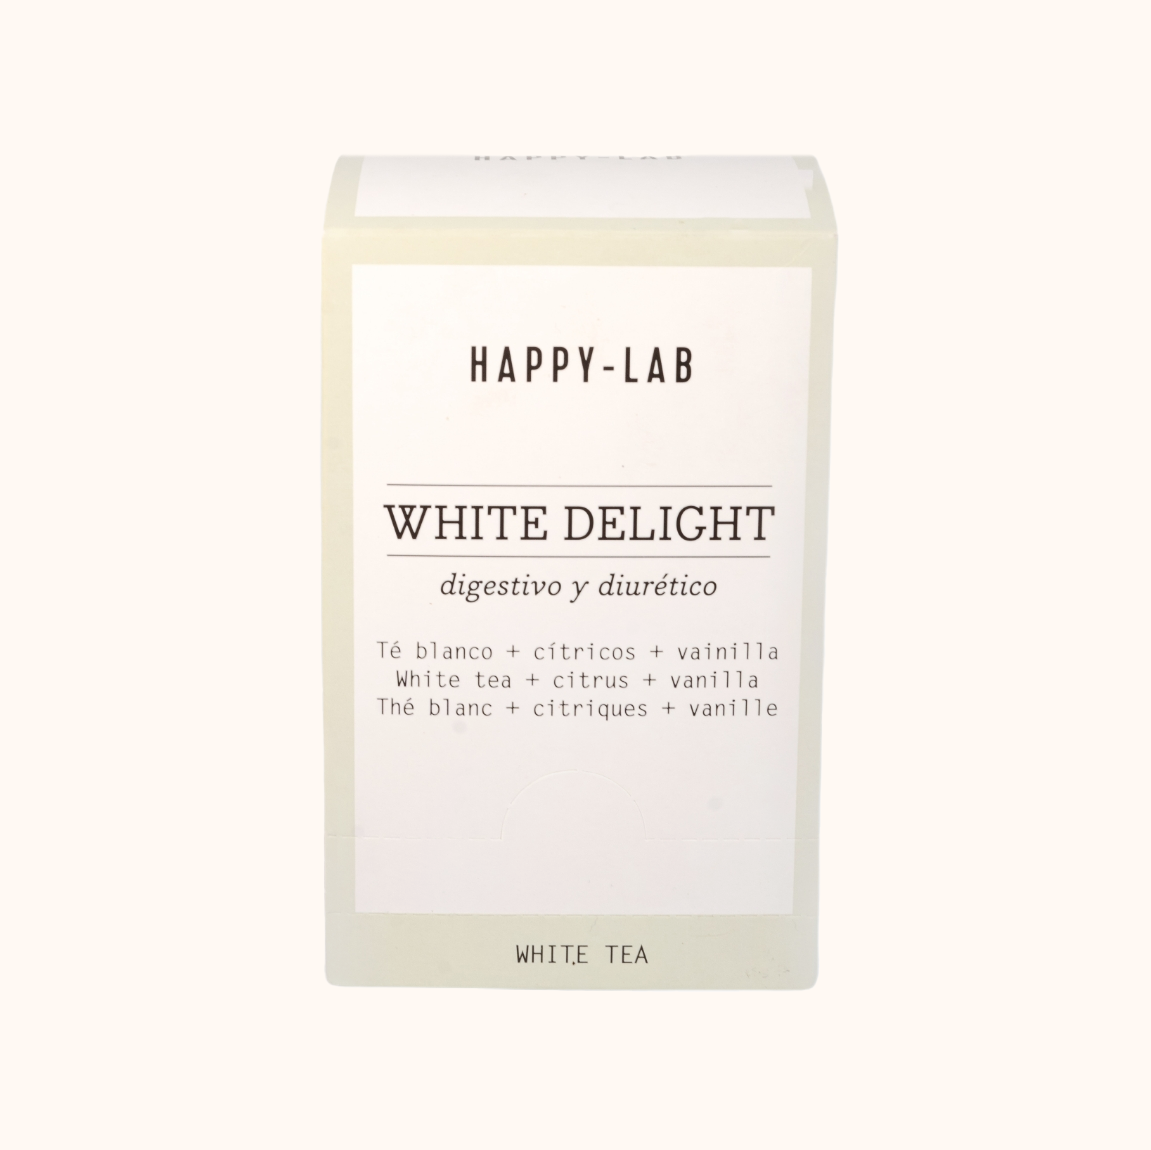 White Delight